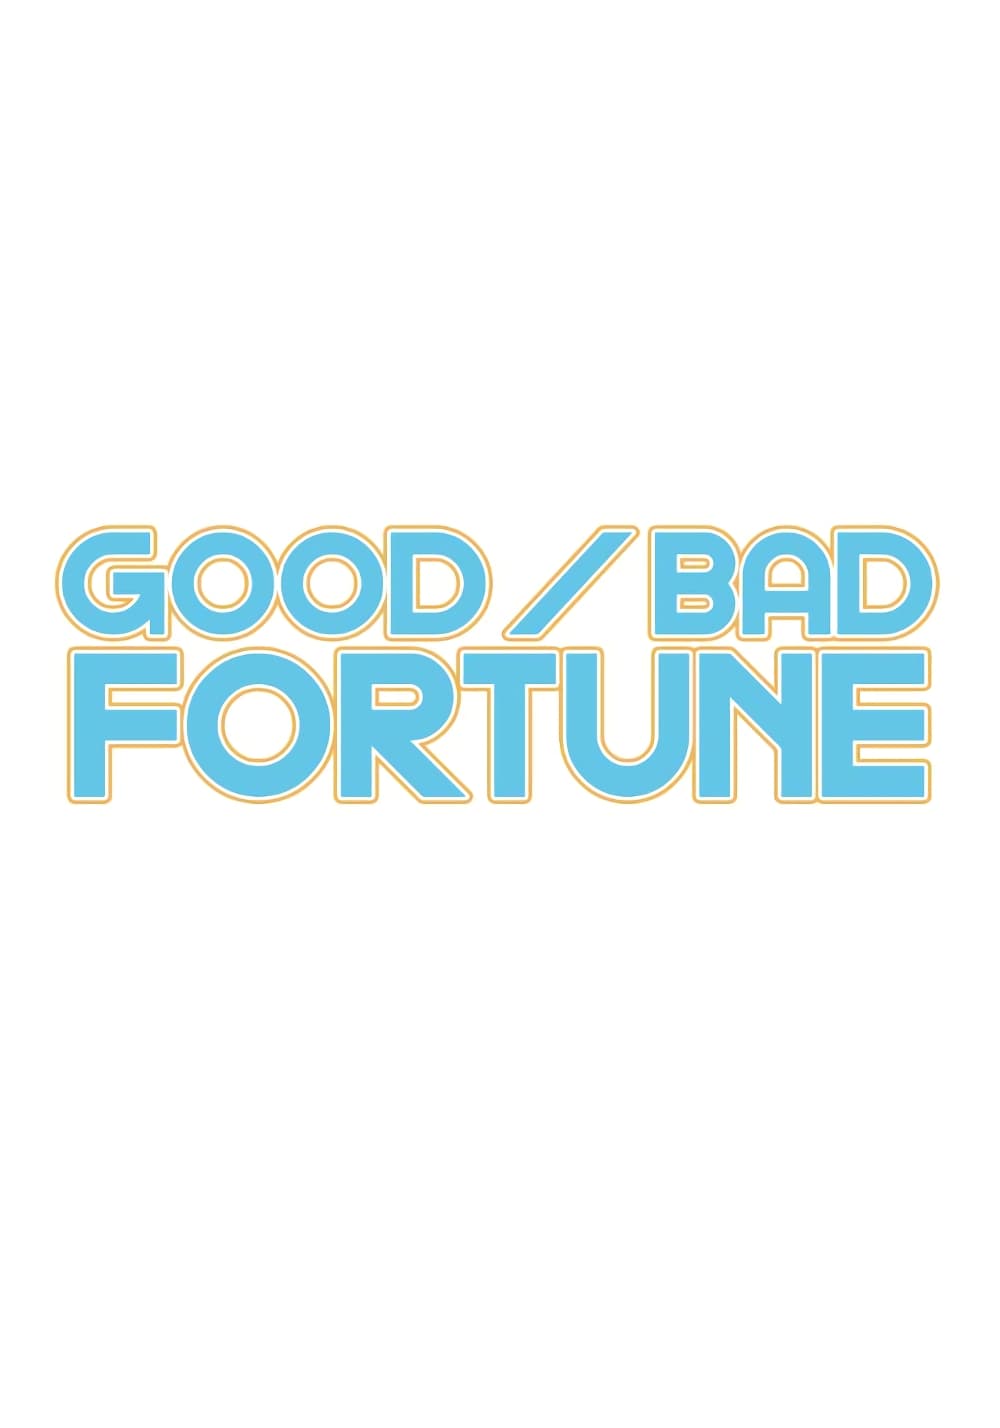 Good/Bad Fortune 22-22